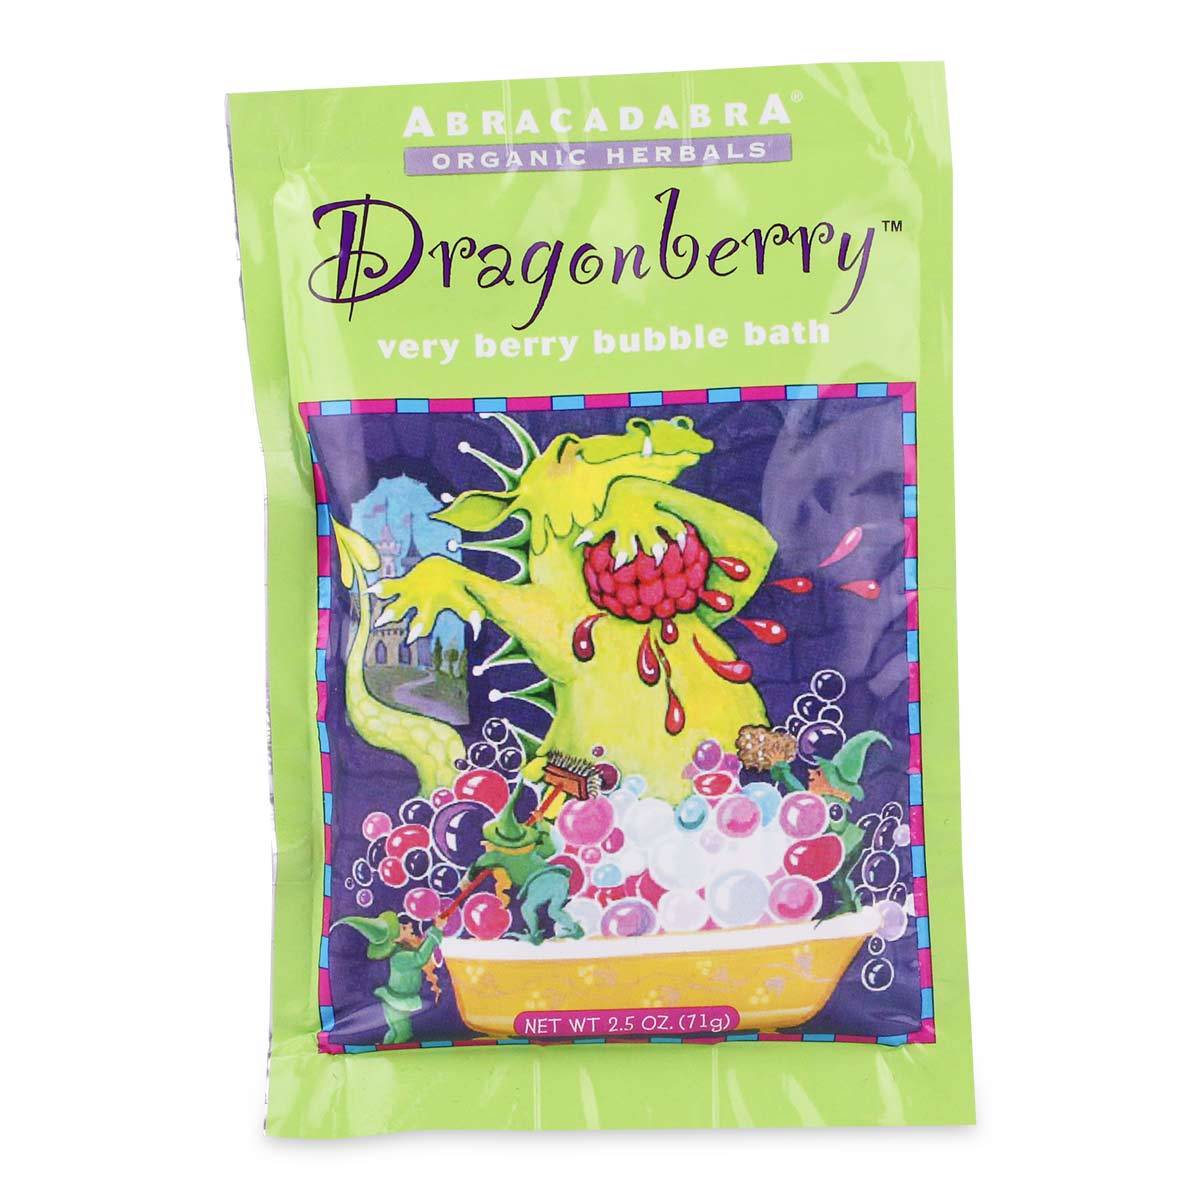 Primary image of Abracadabra Children's Dragonberry Bubble Bath